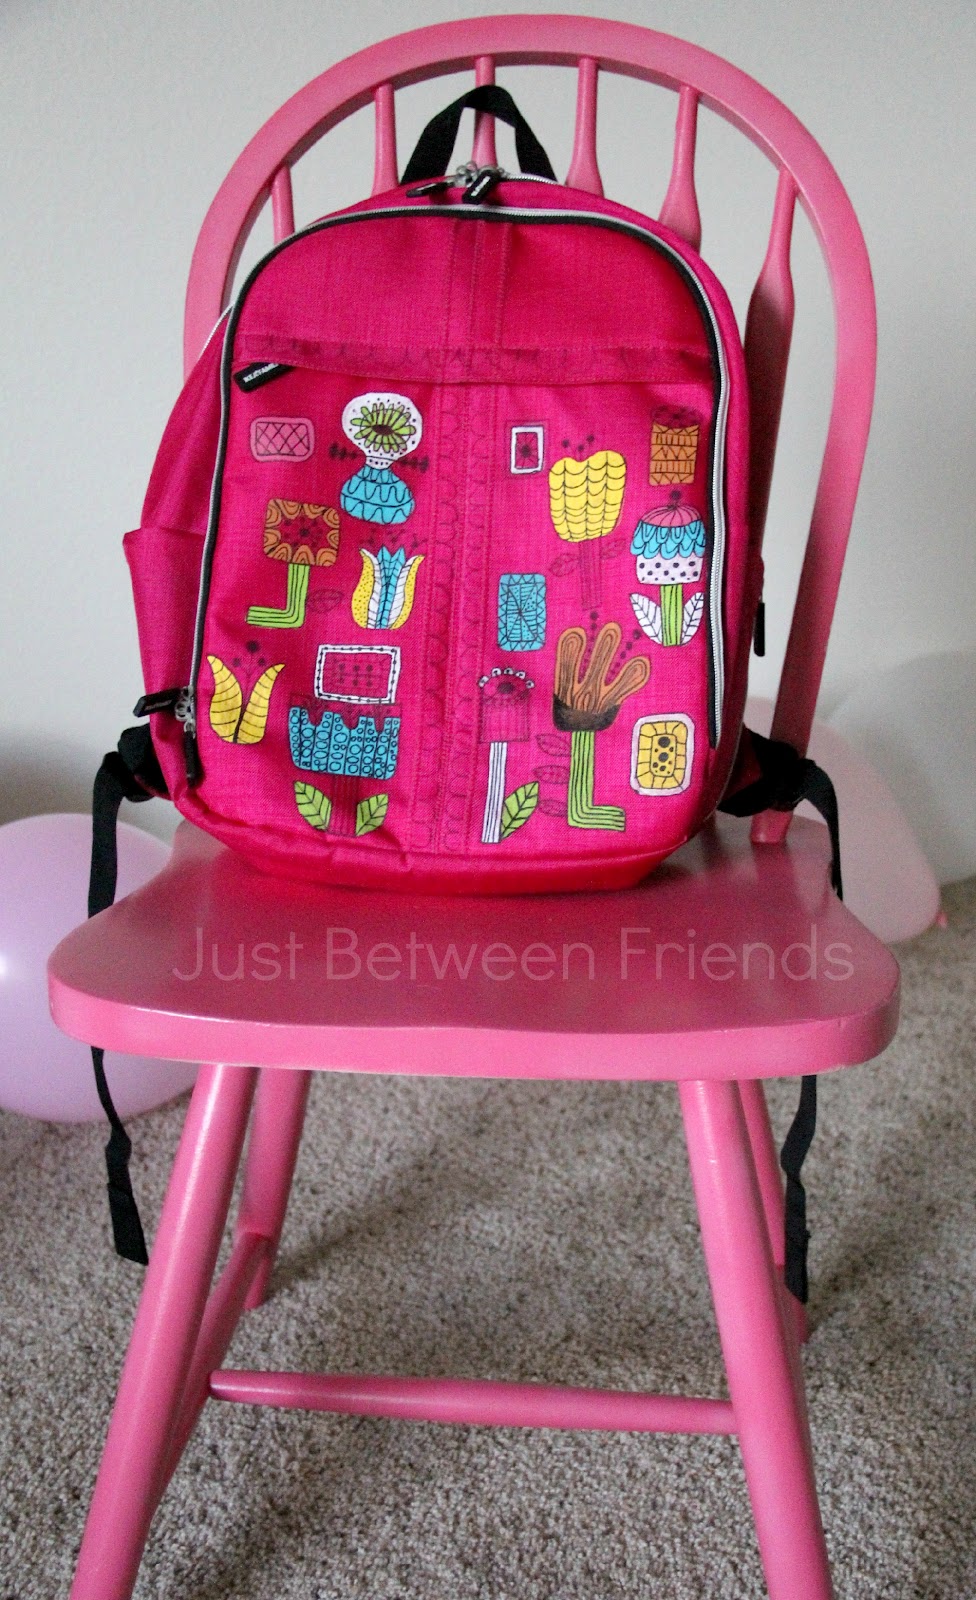 Just Between Friends: Backpack for School